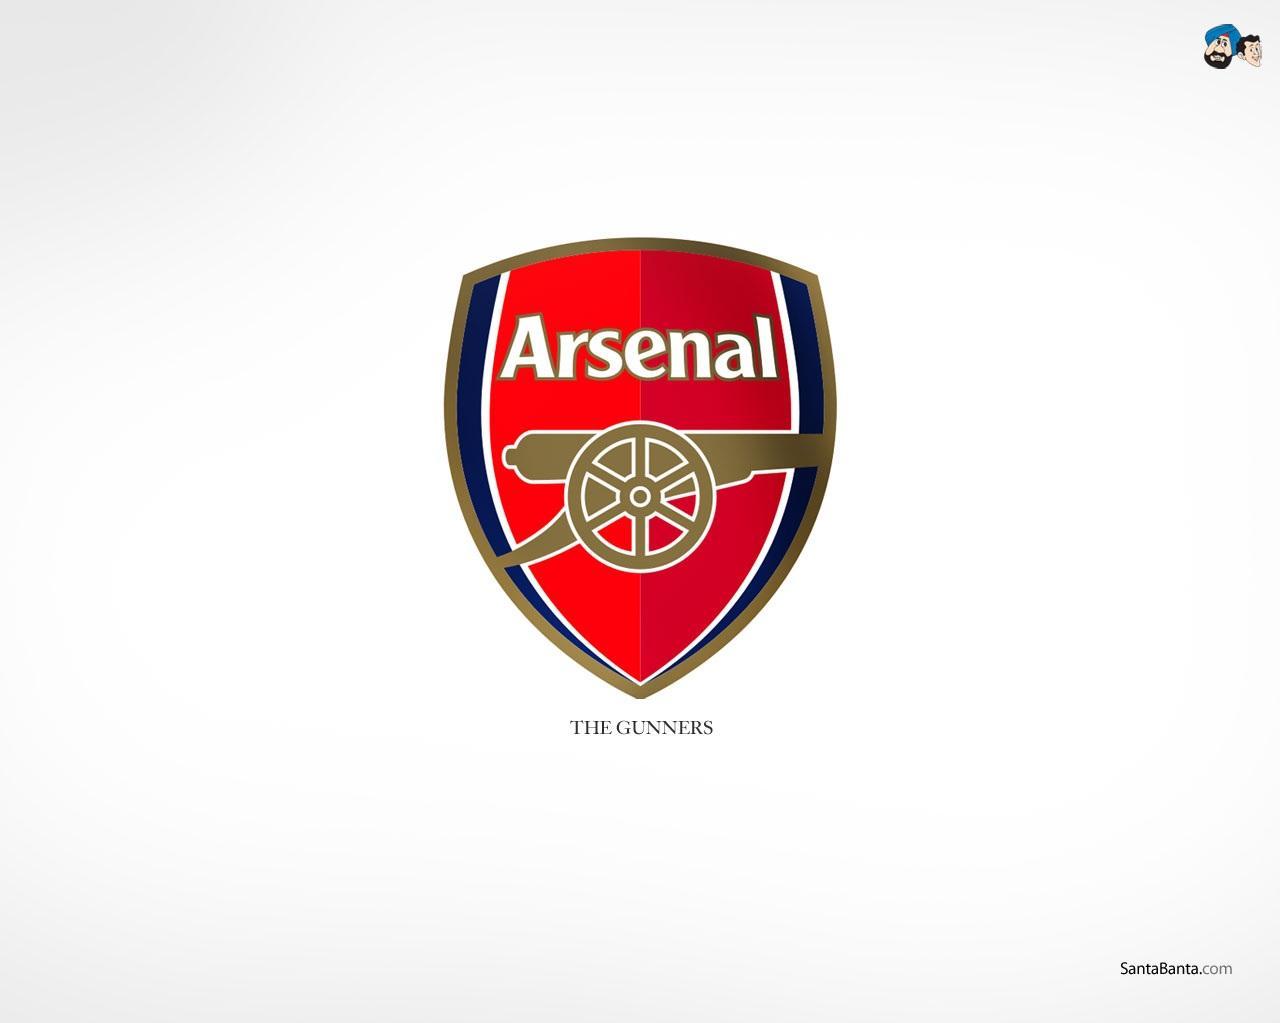 Arsenal Fc Logo Fondos De Pantalla Im Genes Por Lisabeth17